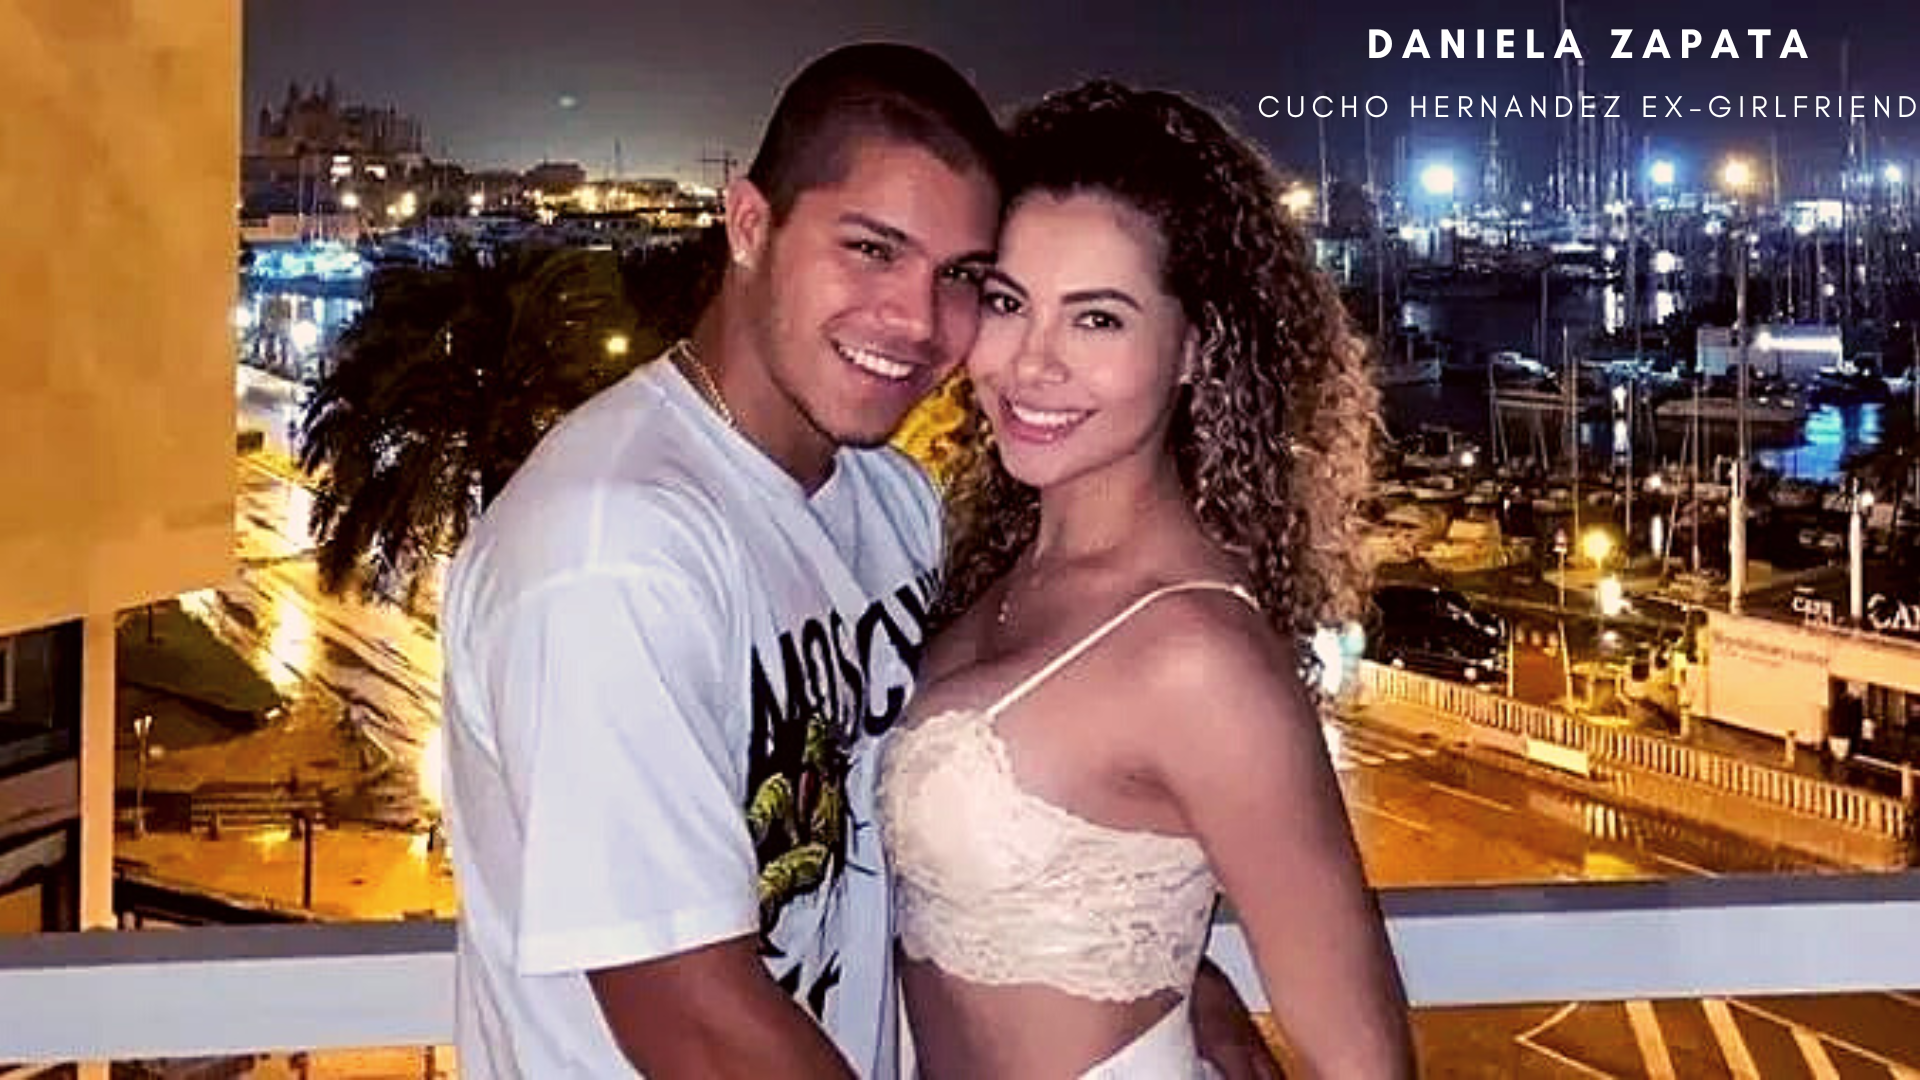 Cucho Hernandez with his Ex-Girlfriend Daniela Zapata. (Credit: Instagram)